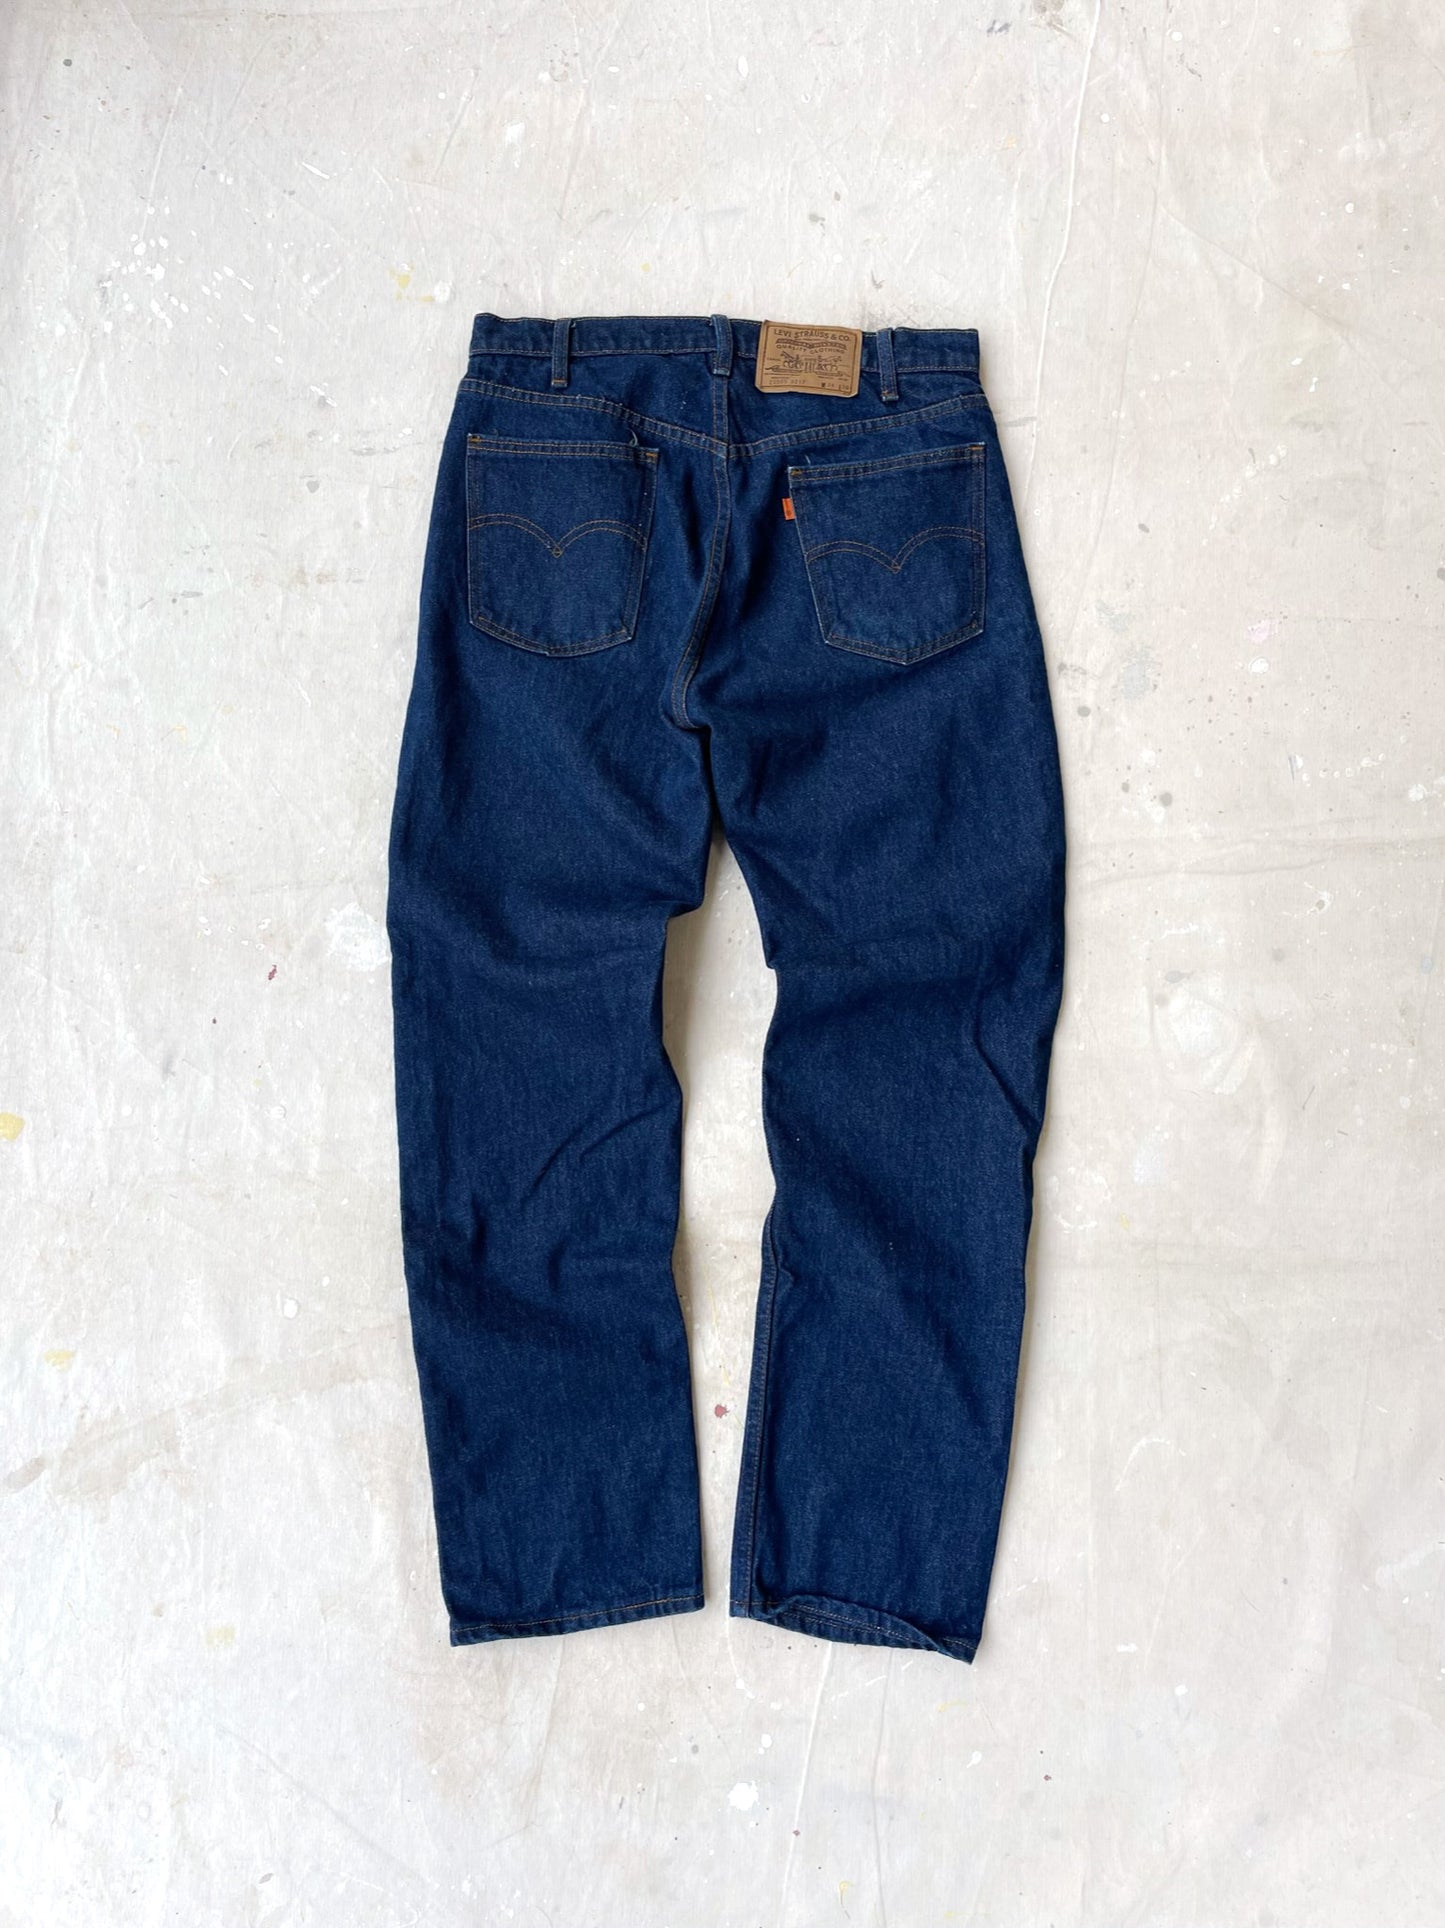 Levi's 505 Orange Tab Jeans—[32X30]